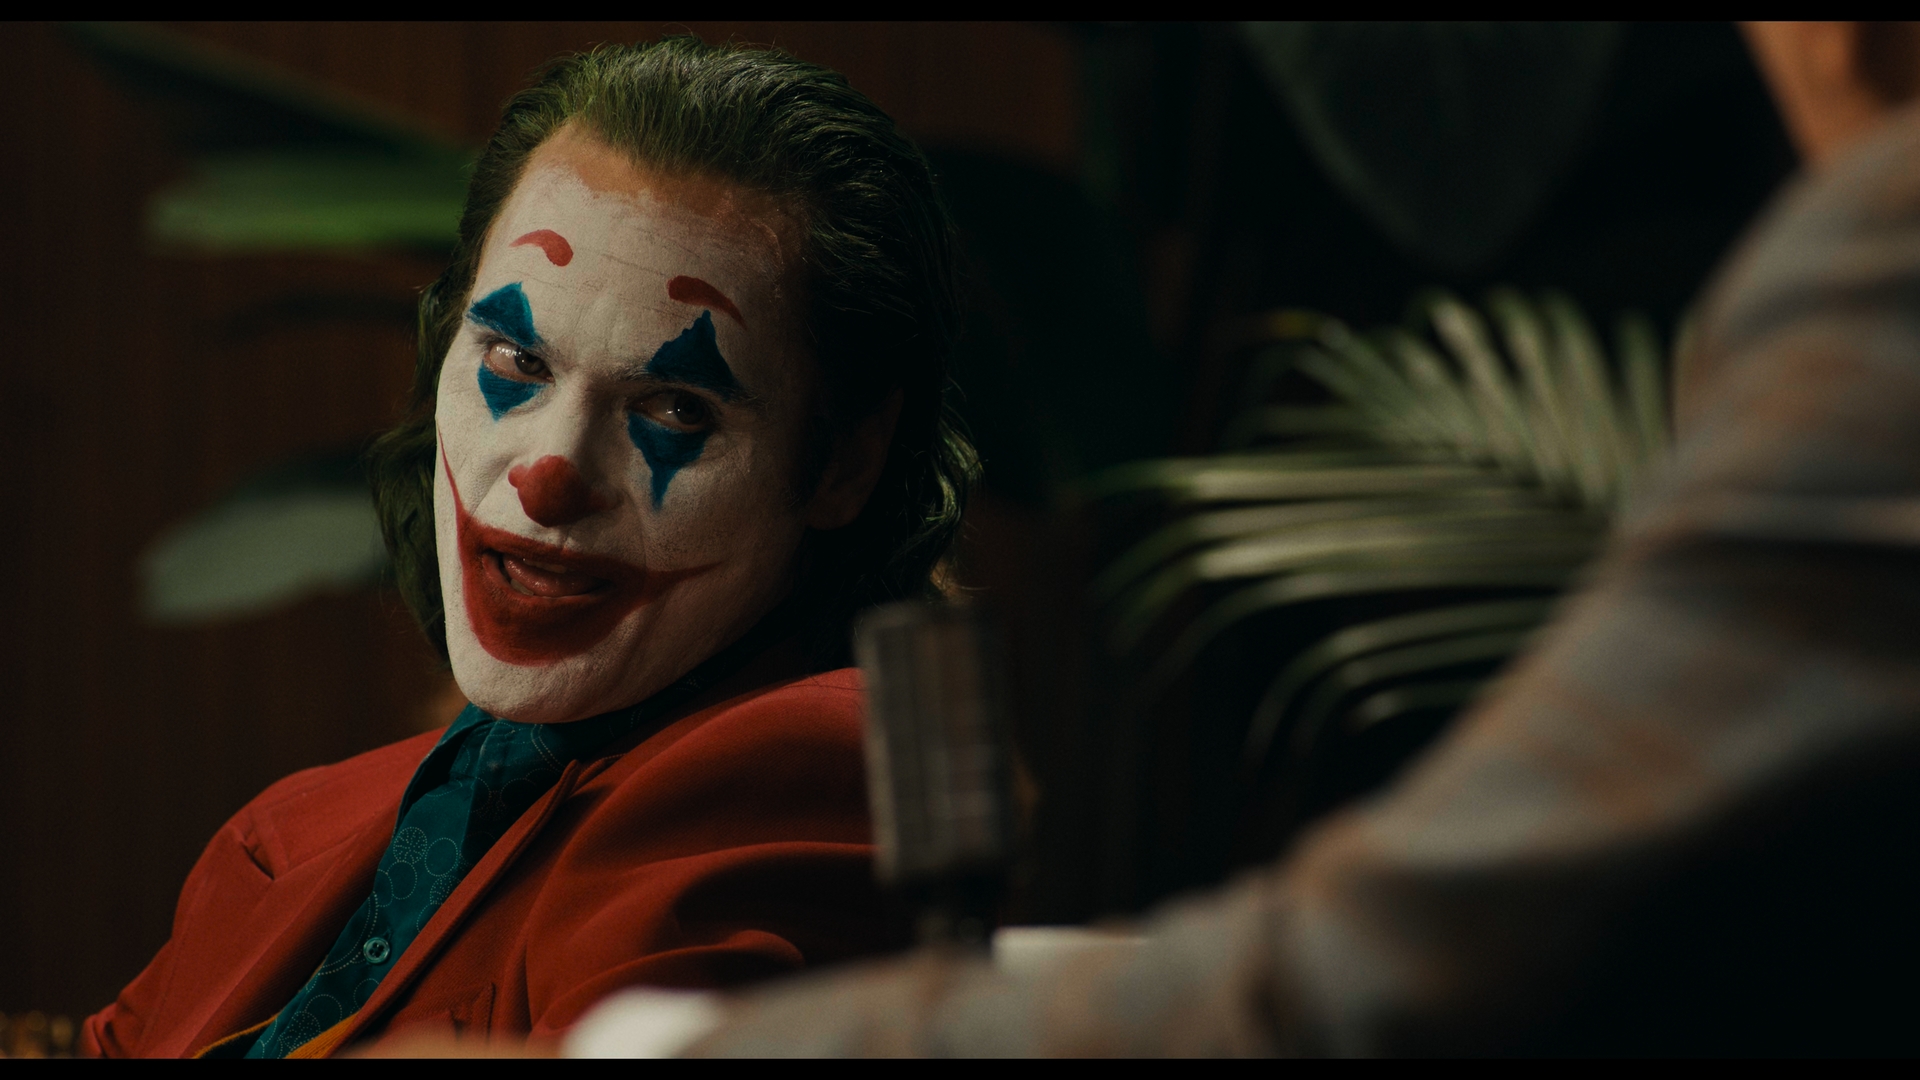 People 1920x1080 Joker Joaquin Phoenix Joker (2019 Movie) DC Comics makeup clown movies film stills